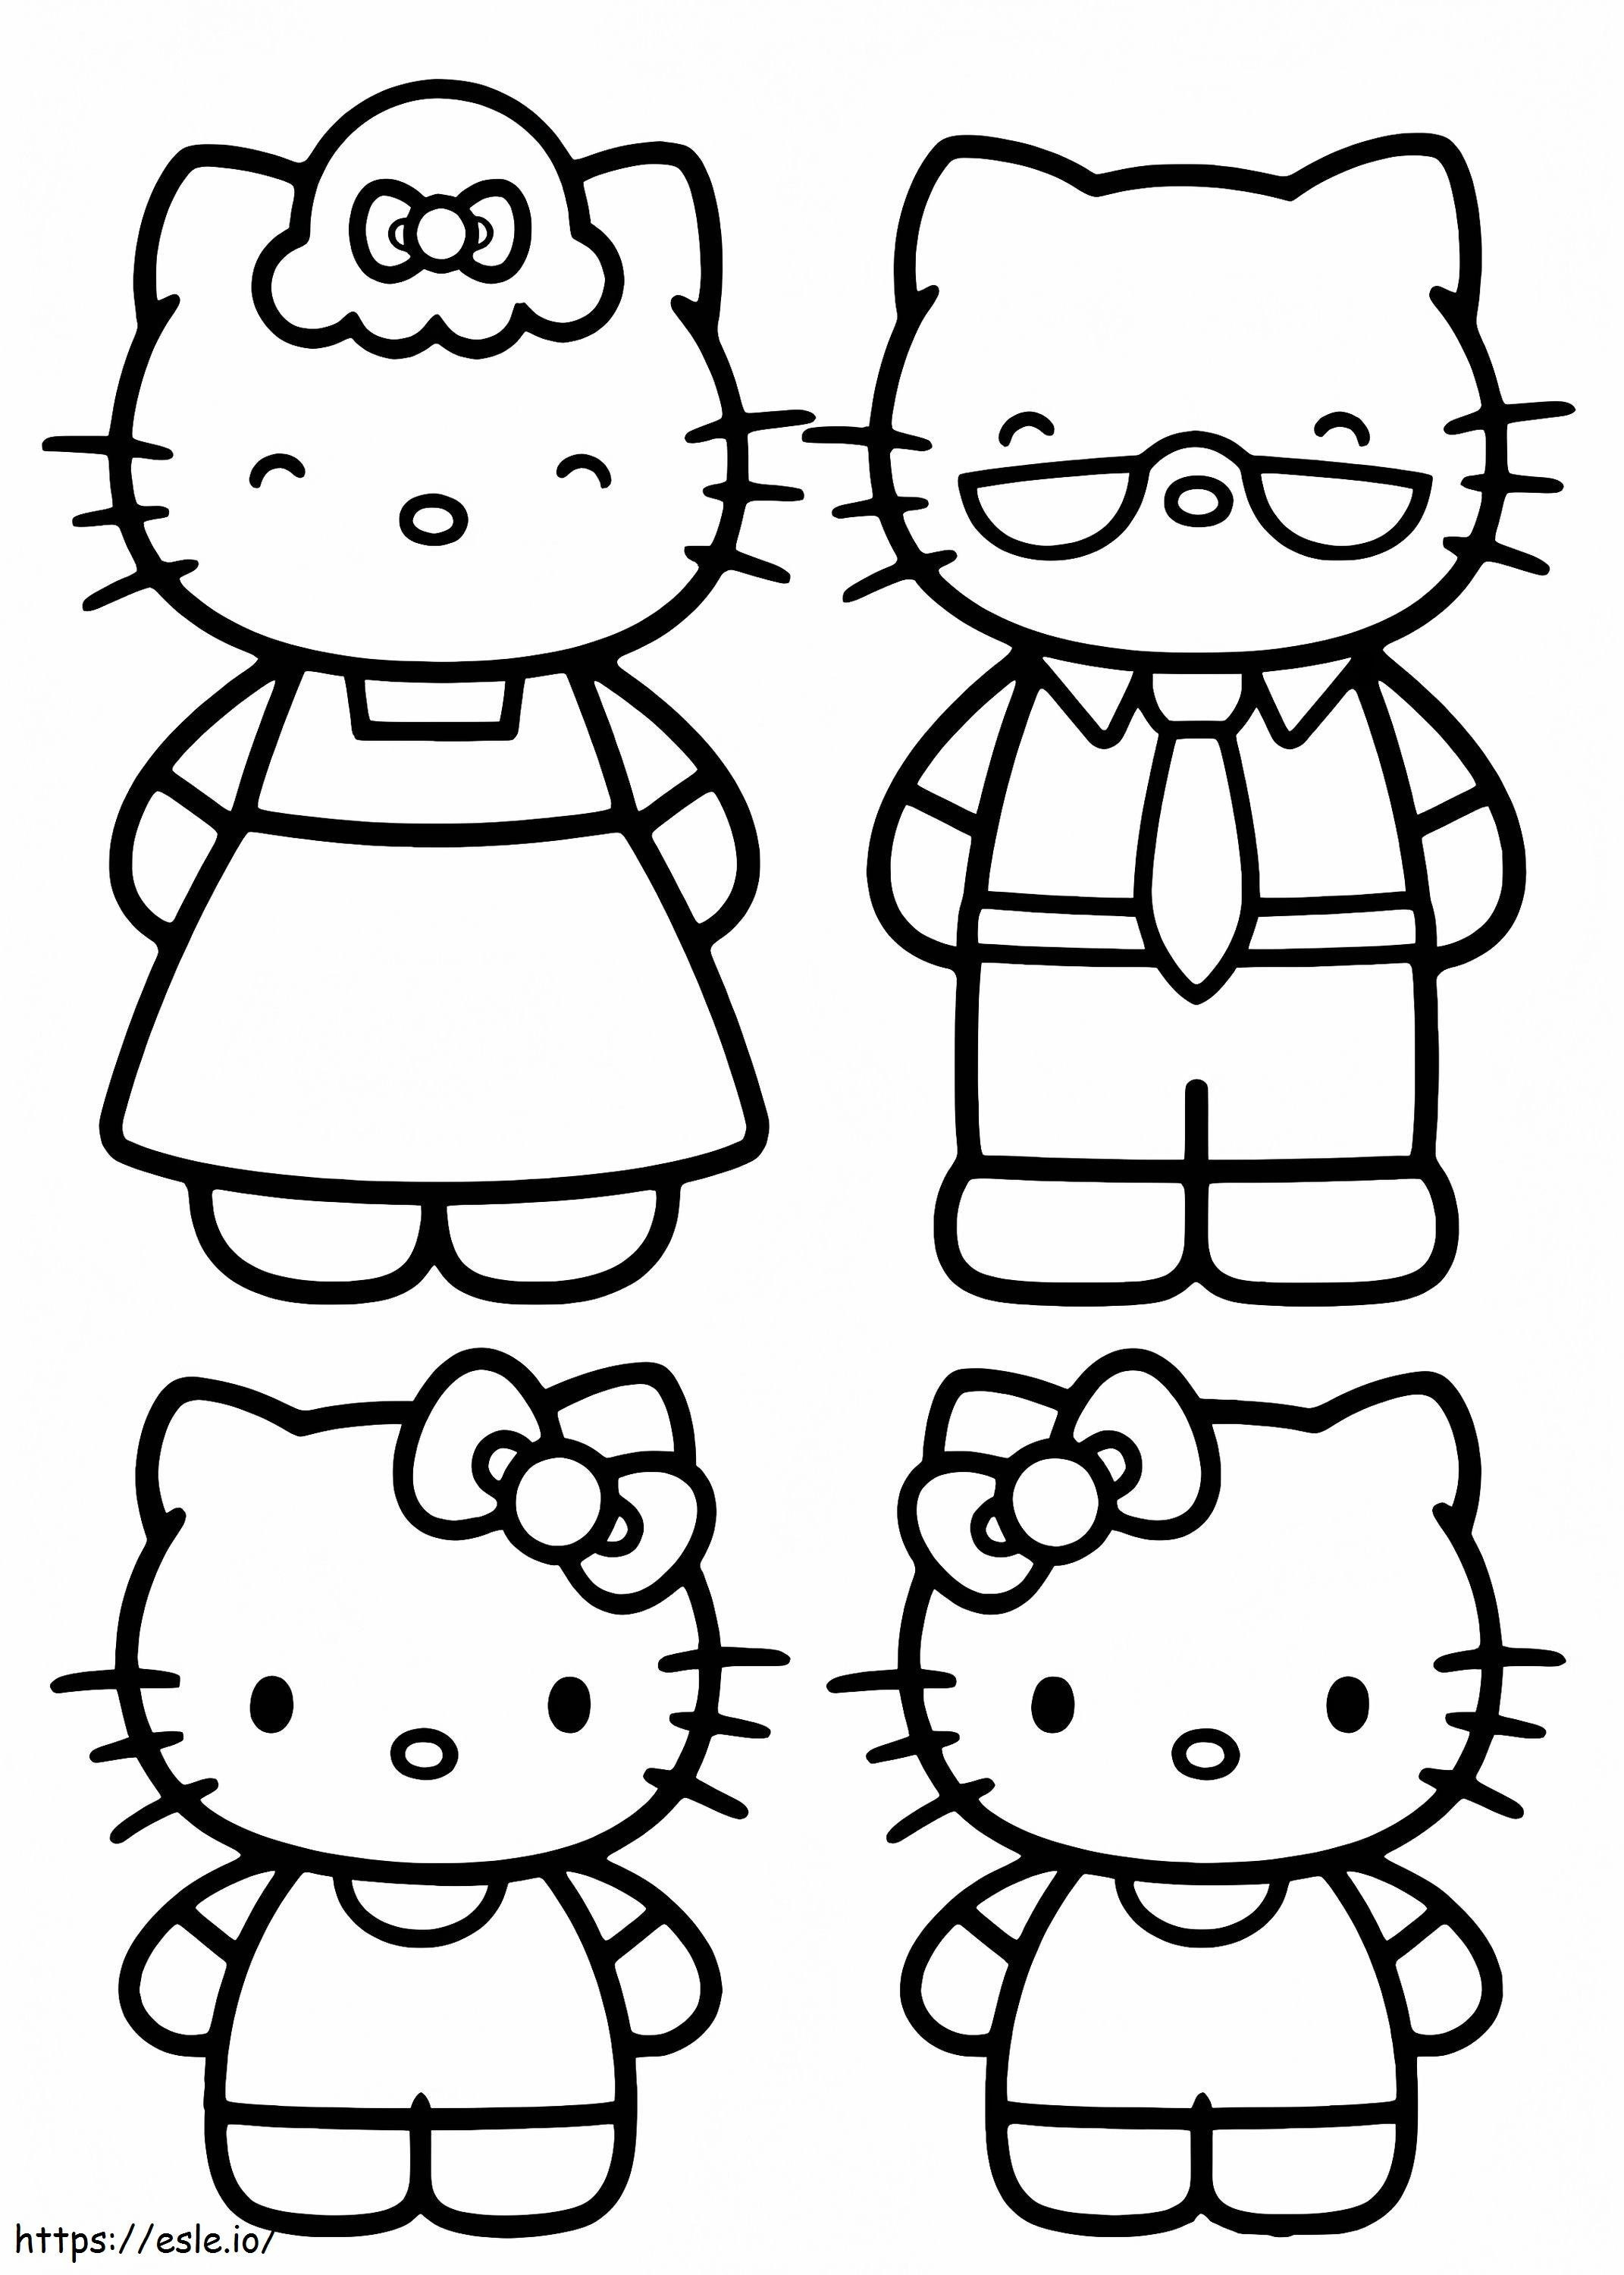 La familia de Hello Kitty para colorear